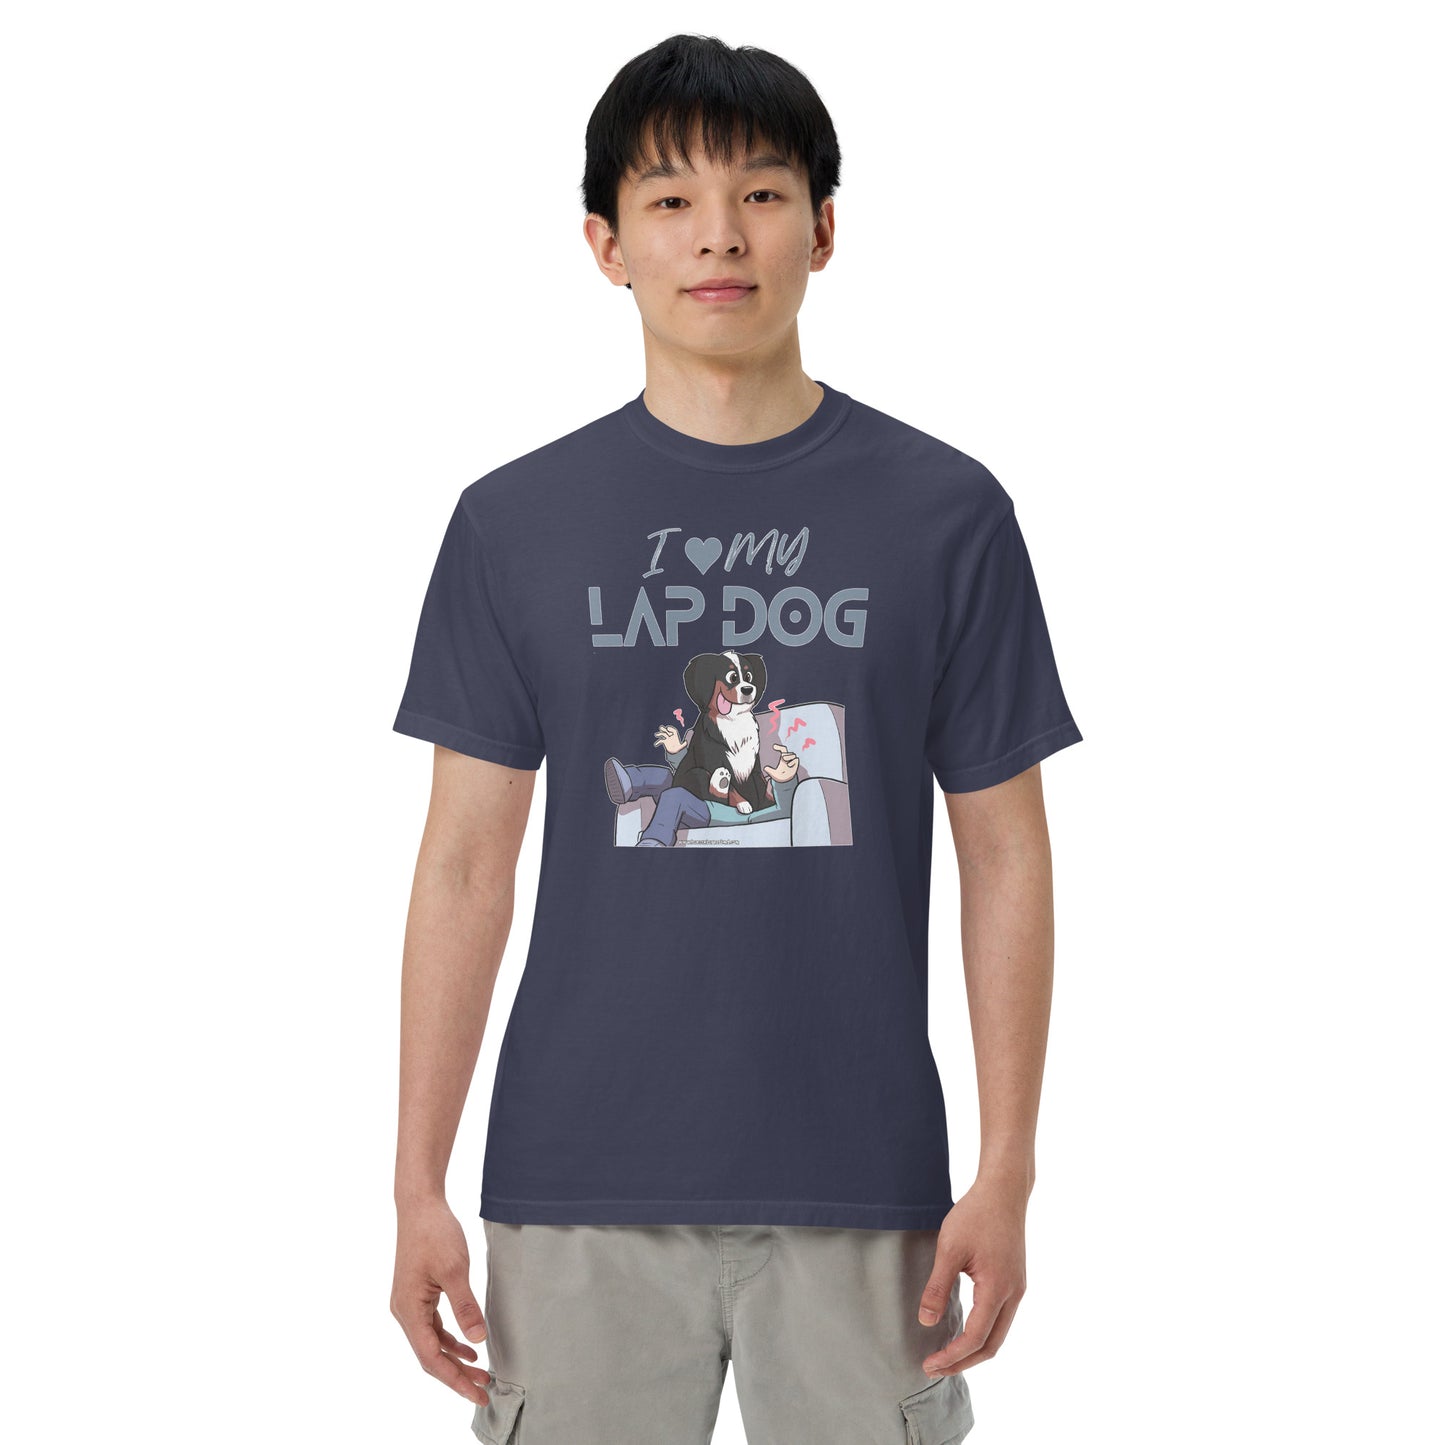 Men’s garment-dyed heavyweight t-shirt: I LOVE MY LAPDOG